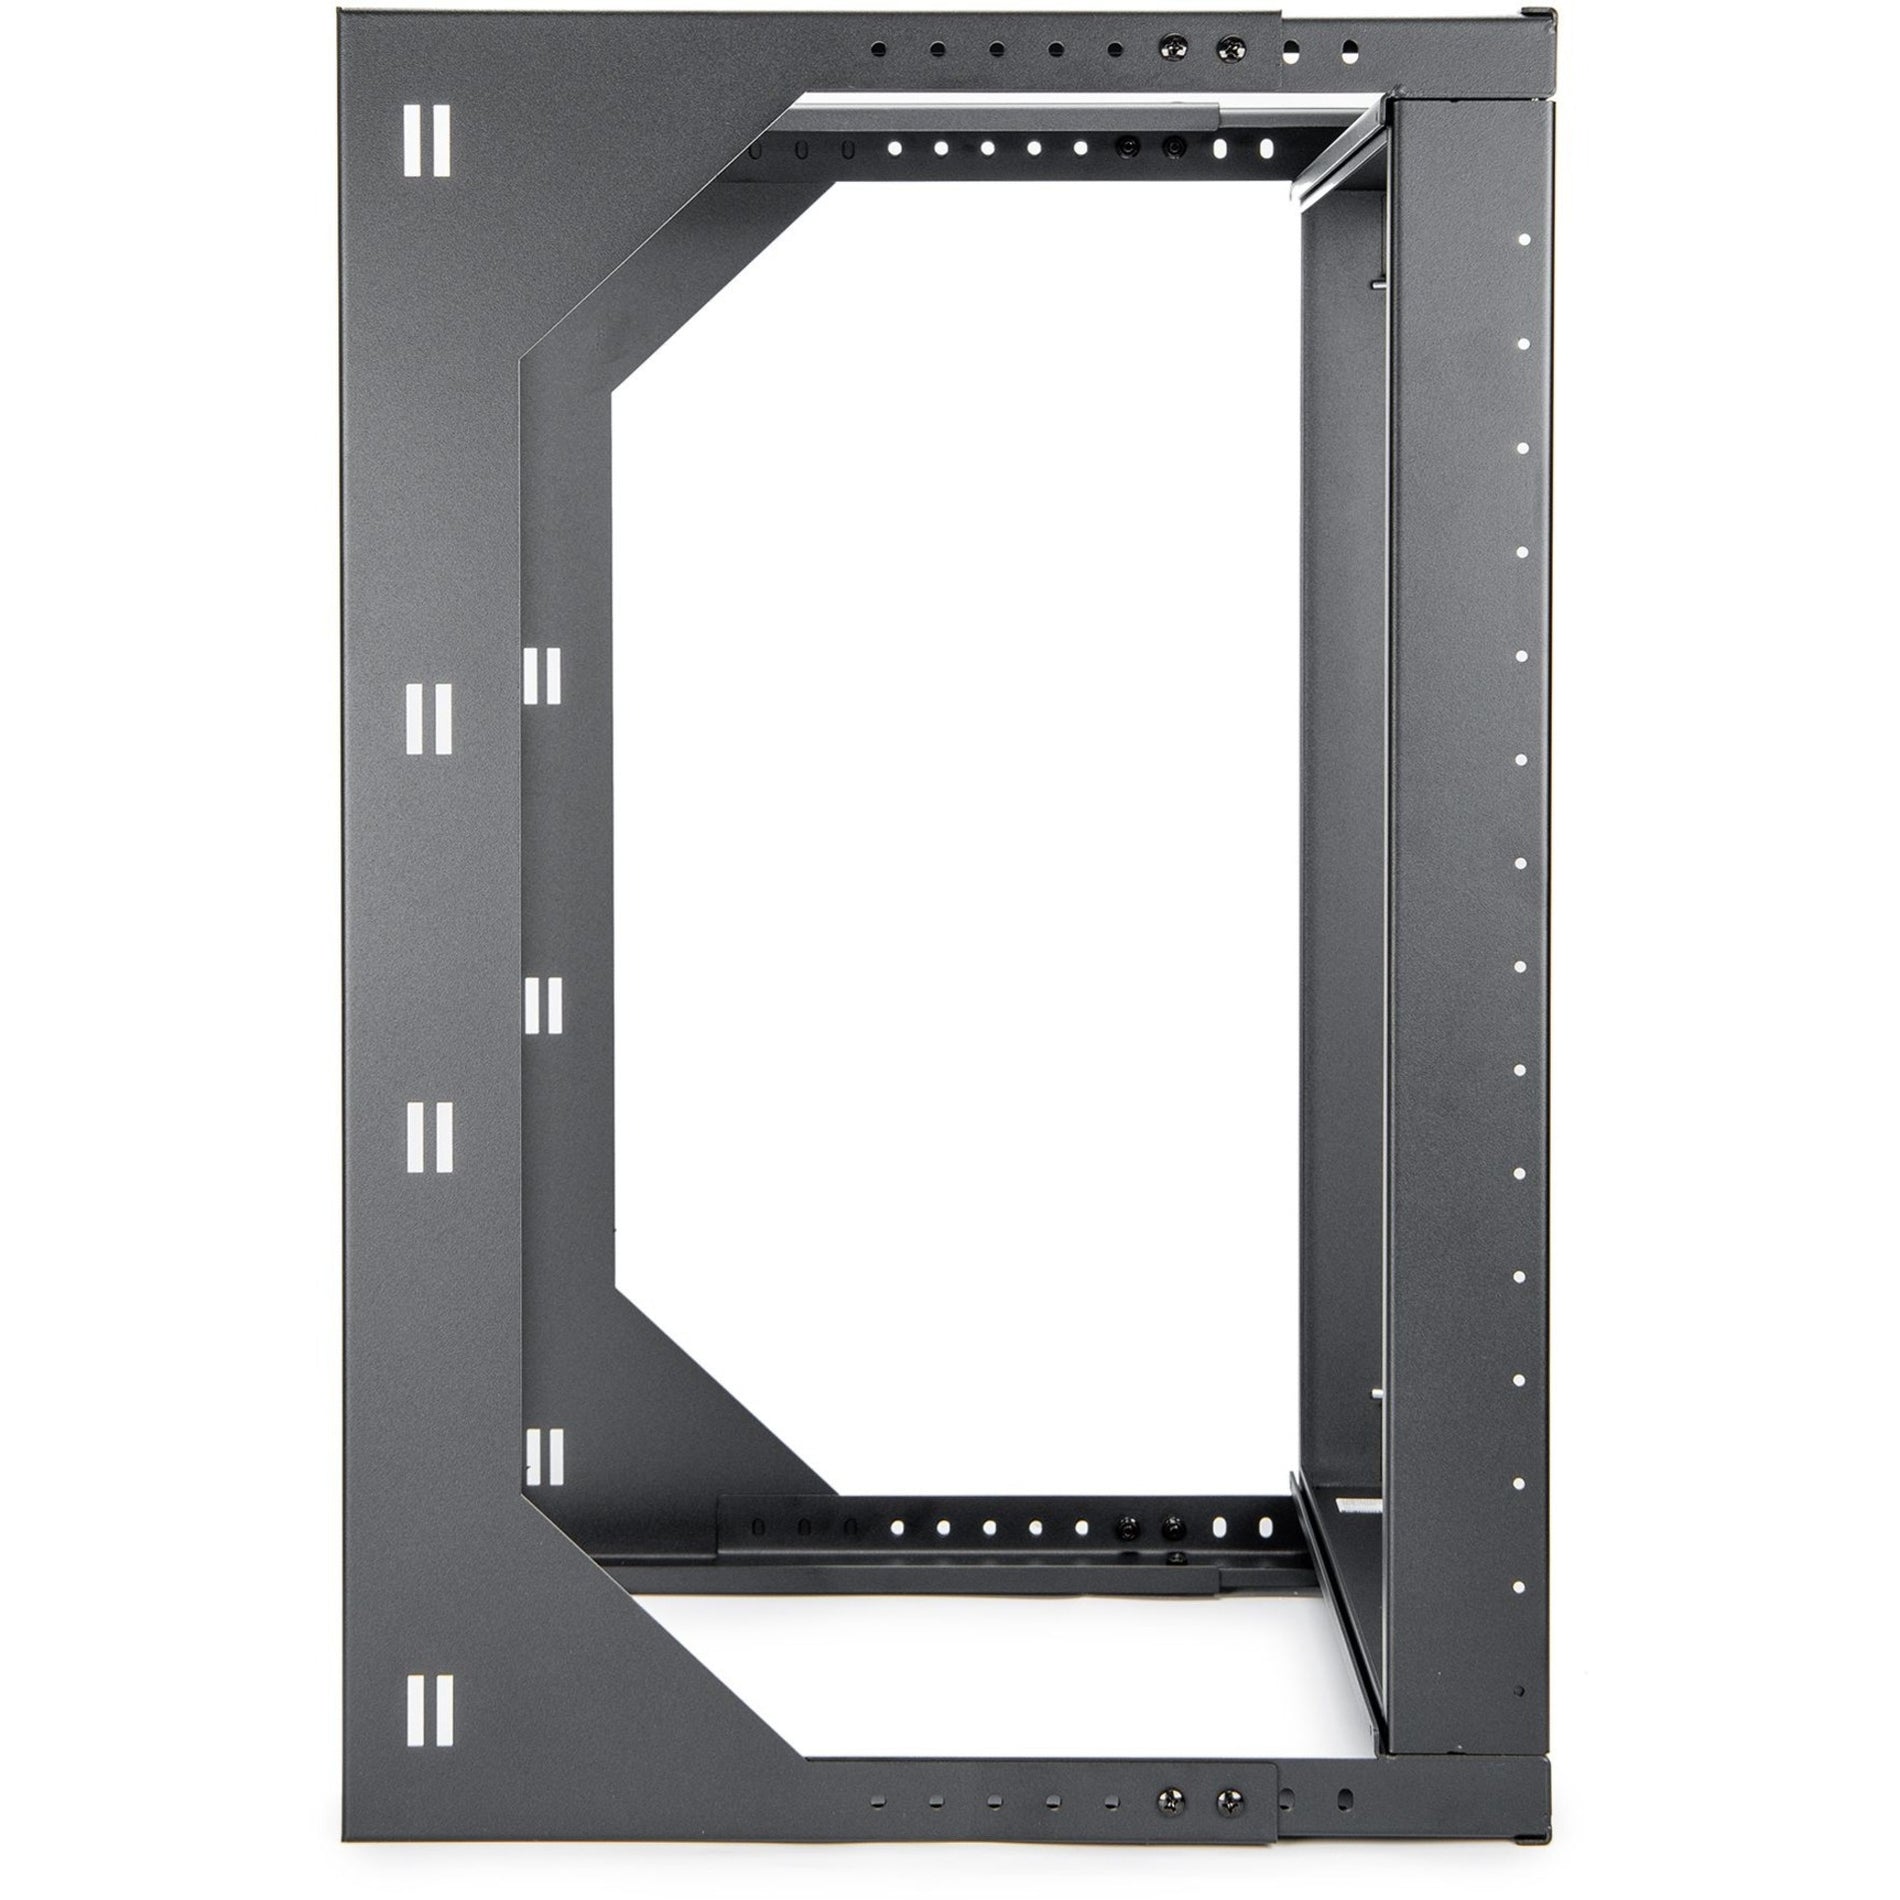 Rocstor Y10E029-B1 SolidRack 15U Wall Mount Server Rack, Adjustable Depth, Heavy Duty